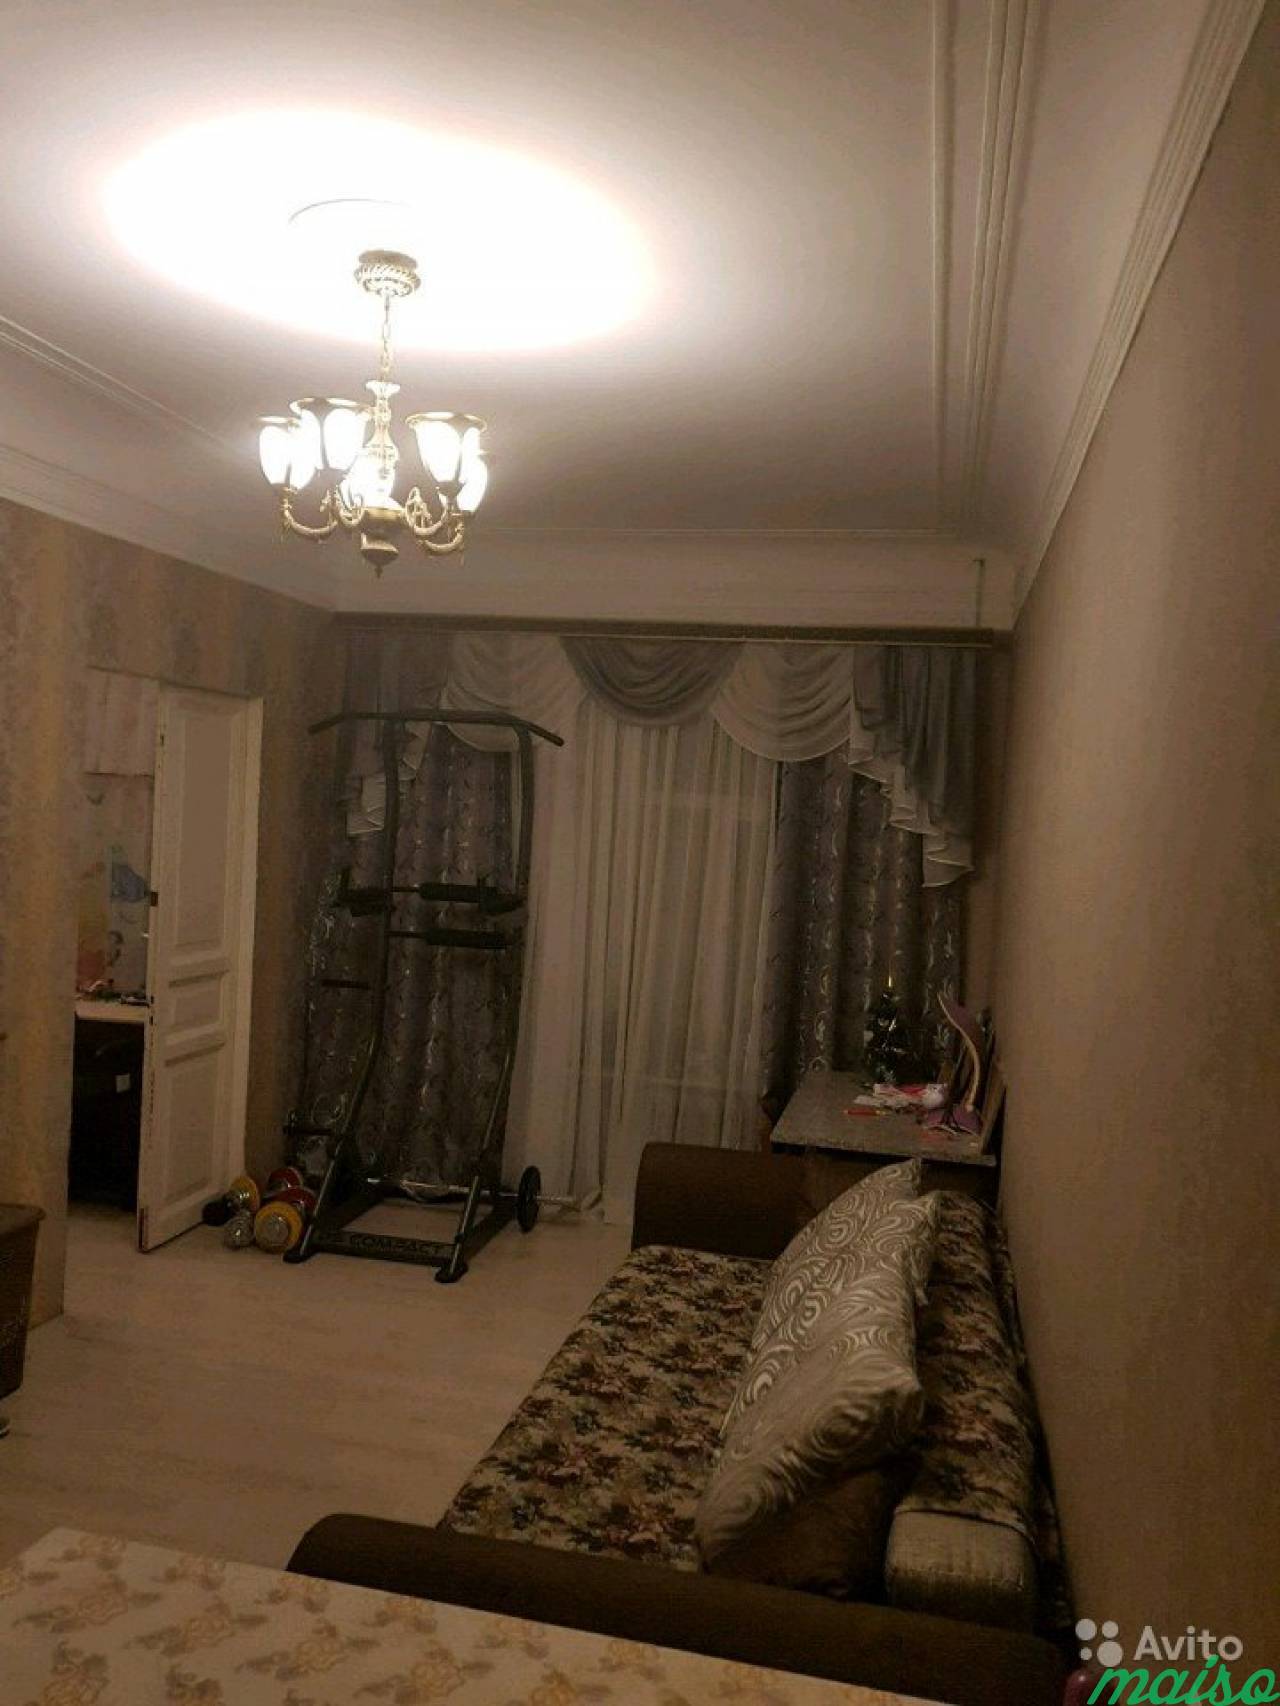 Комната 20 м² в 5-к, 3/4 эт. в Санкт-Петербурге. Фото 1